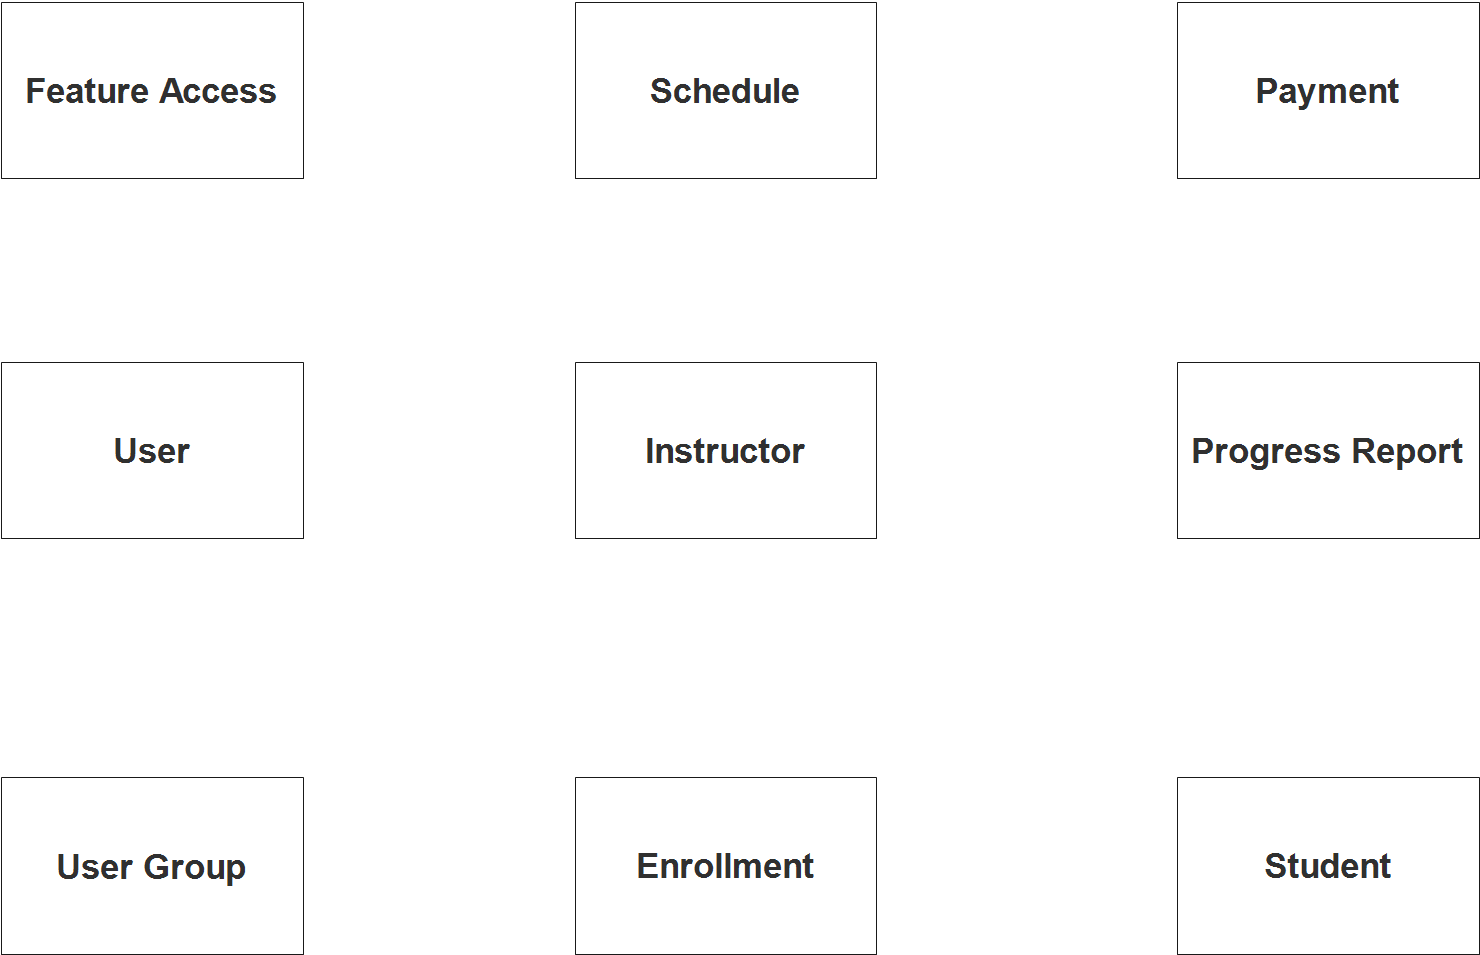 Driving School System ER Diagram - Step 1 Identify Entities